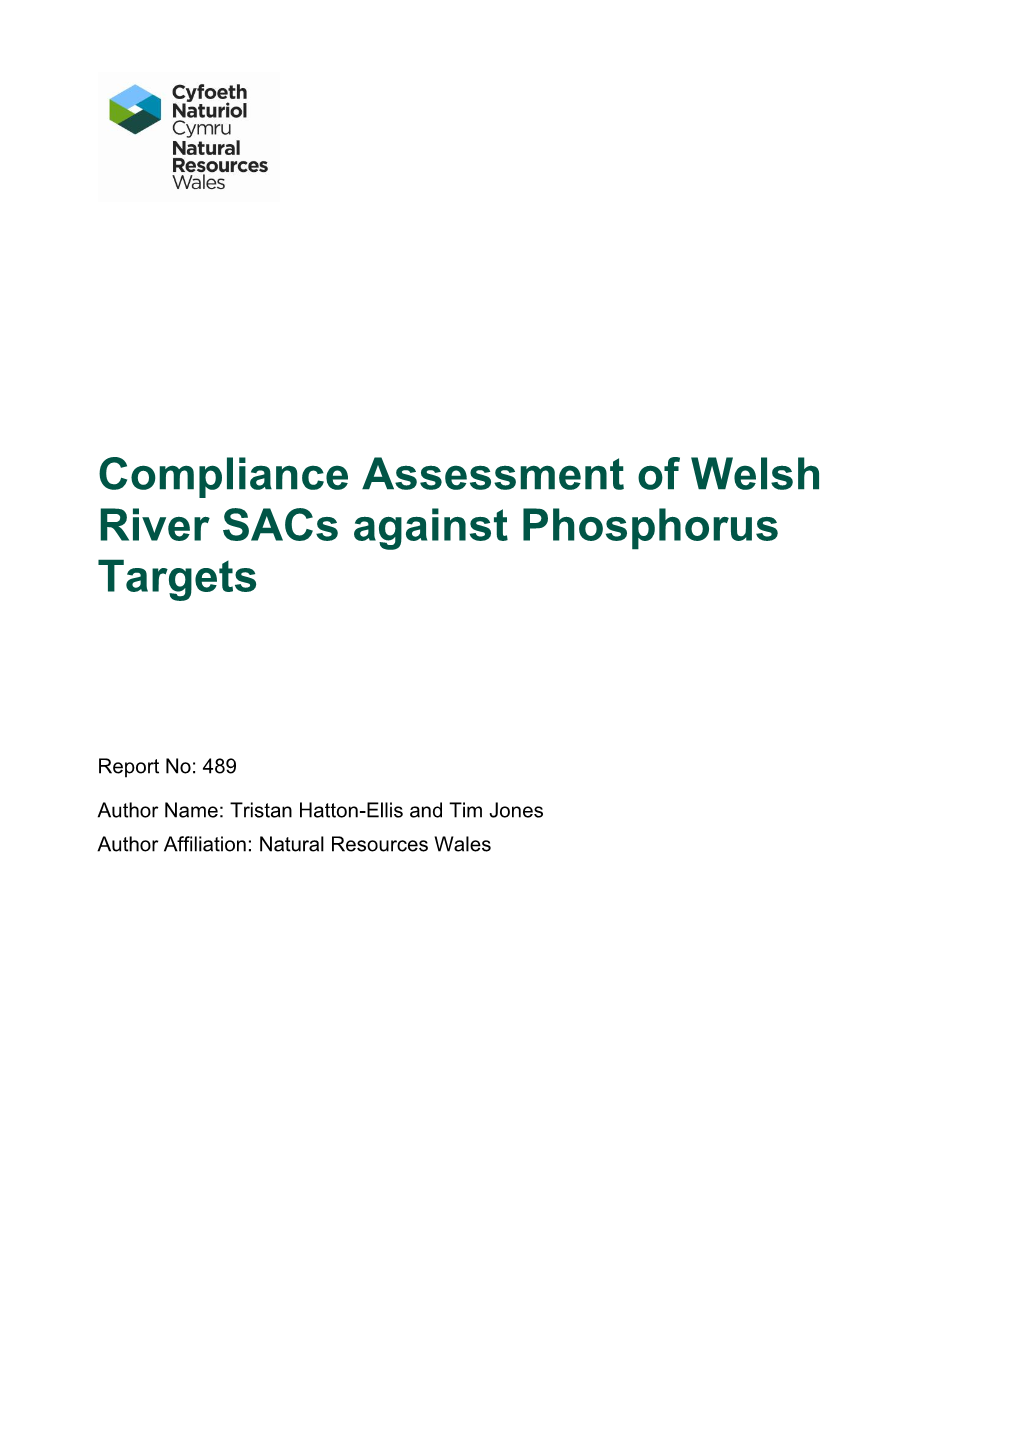 Compliance Assessment of Welsh River Sacs Against Phosphorus Targets